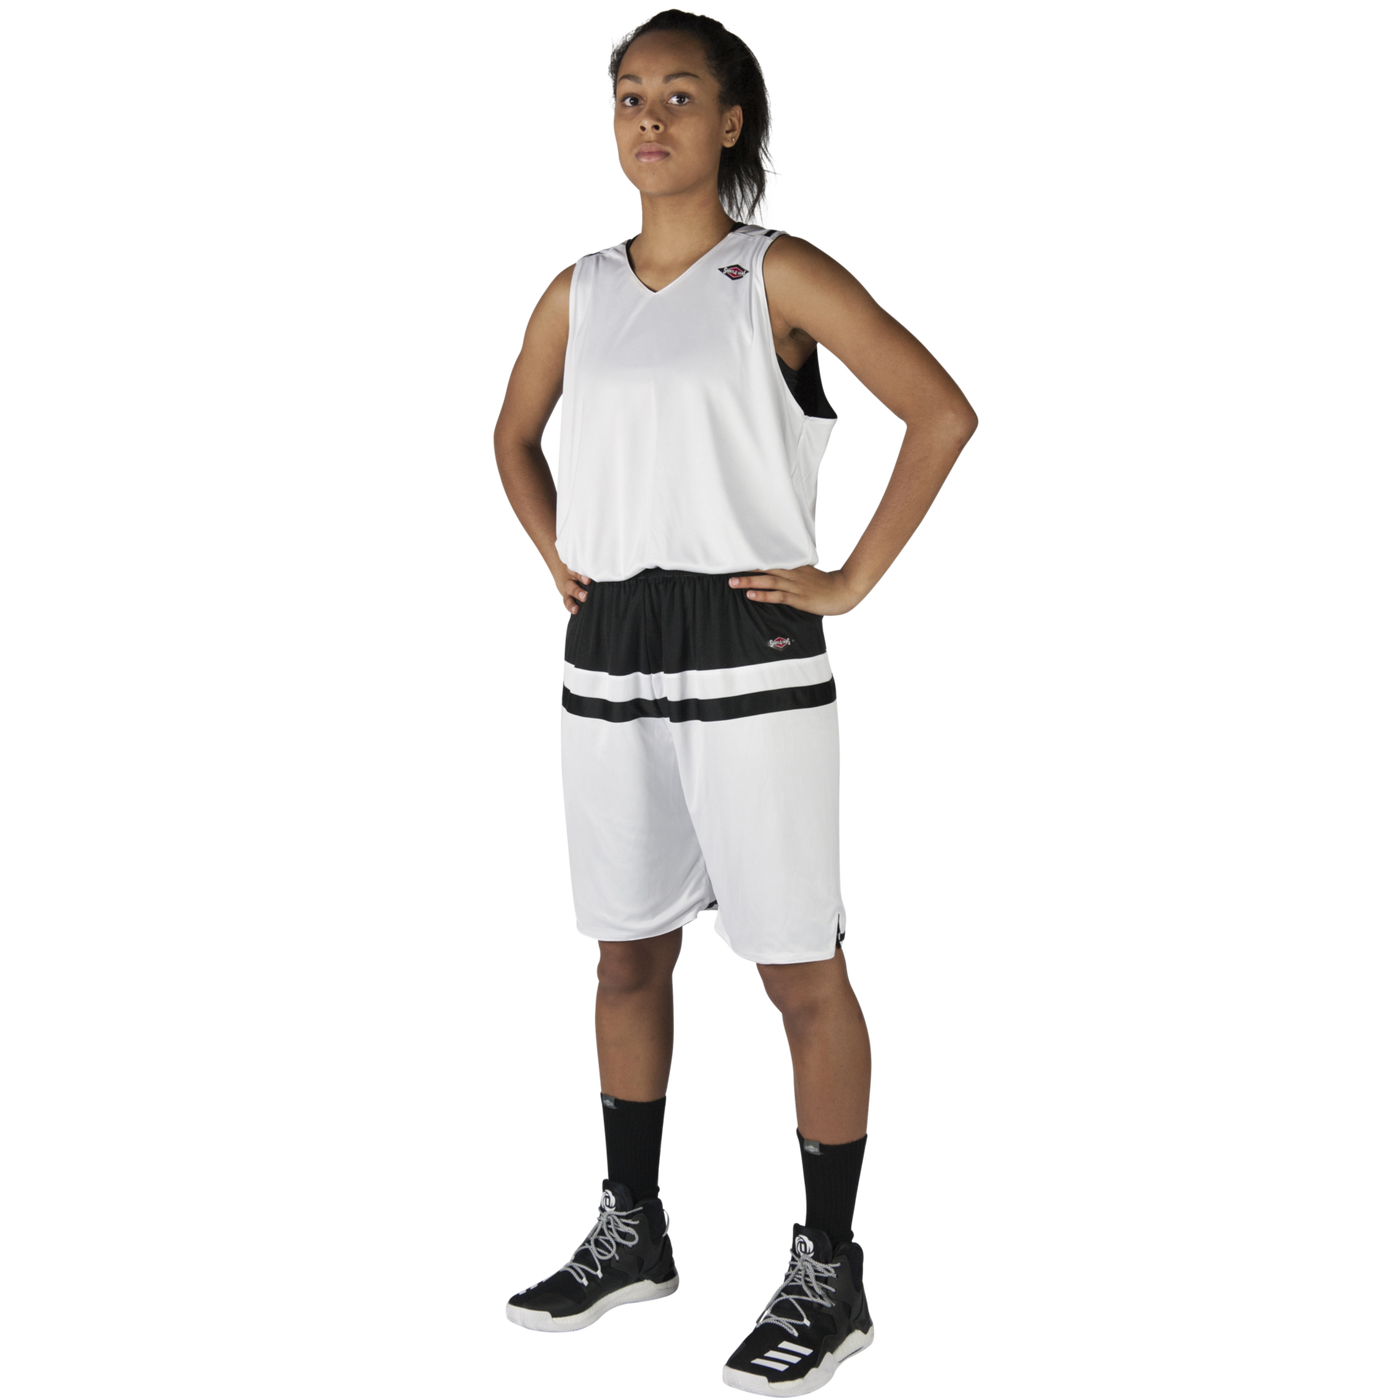 Shirts & Skins Black/White All-Star Reversible Basketball Uniform